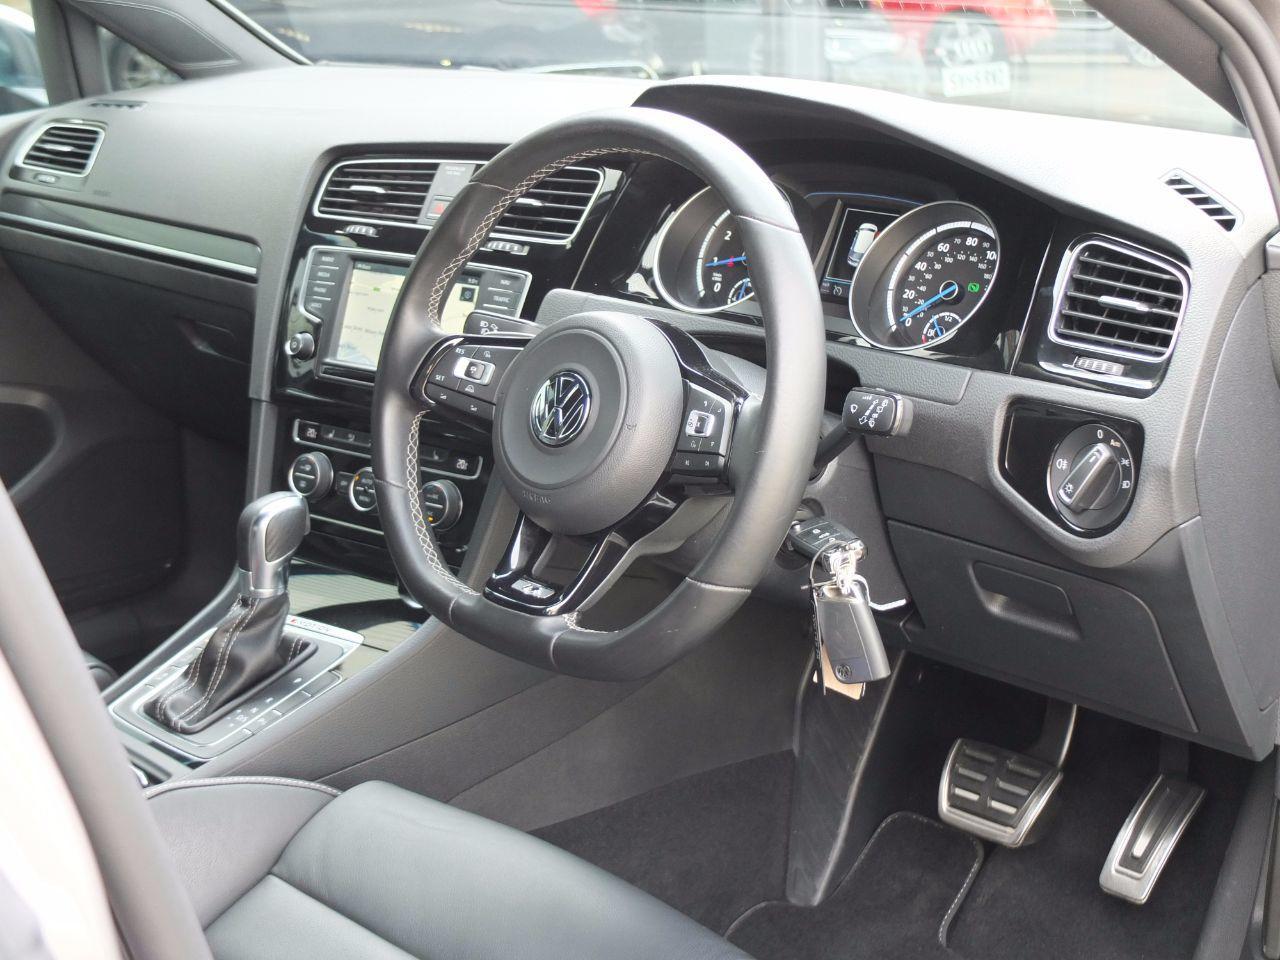 Volkswagen Golf 2.0 TSI R 4MOTION 5 Door DSG 300ps Hatchback Petrol Limestone Grey Metallic